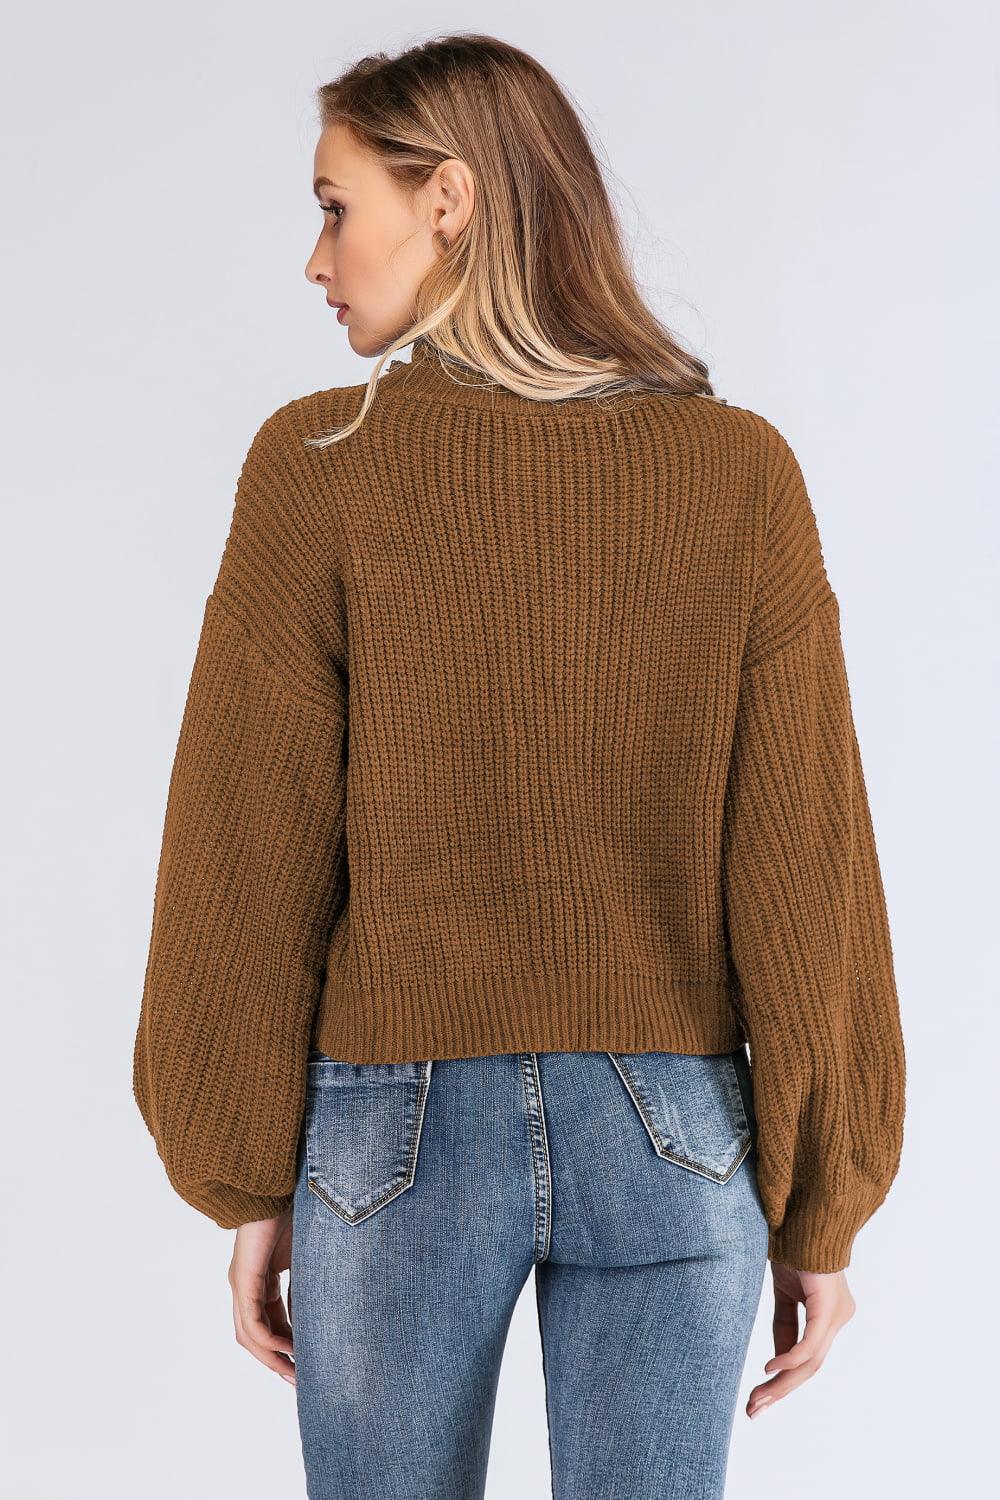 Double Take Turtleneck Rib-Knit Dropped Shoulder Sweater - Closet of Ren